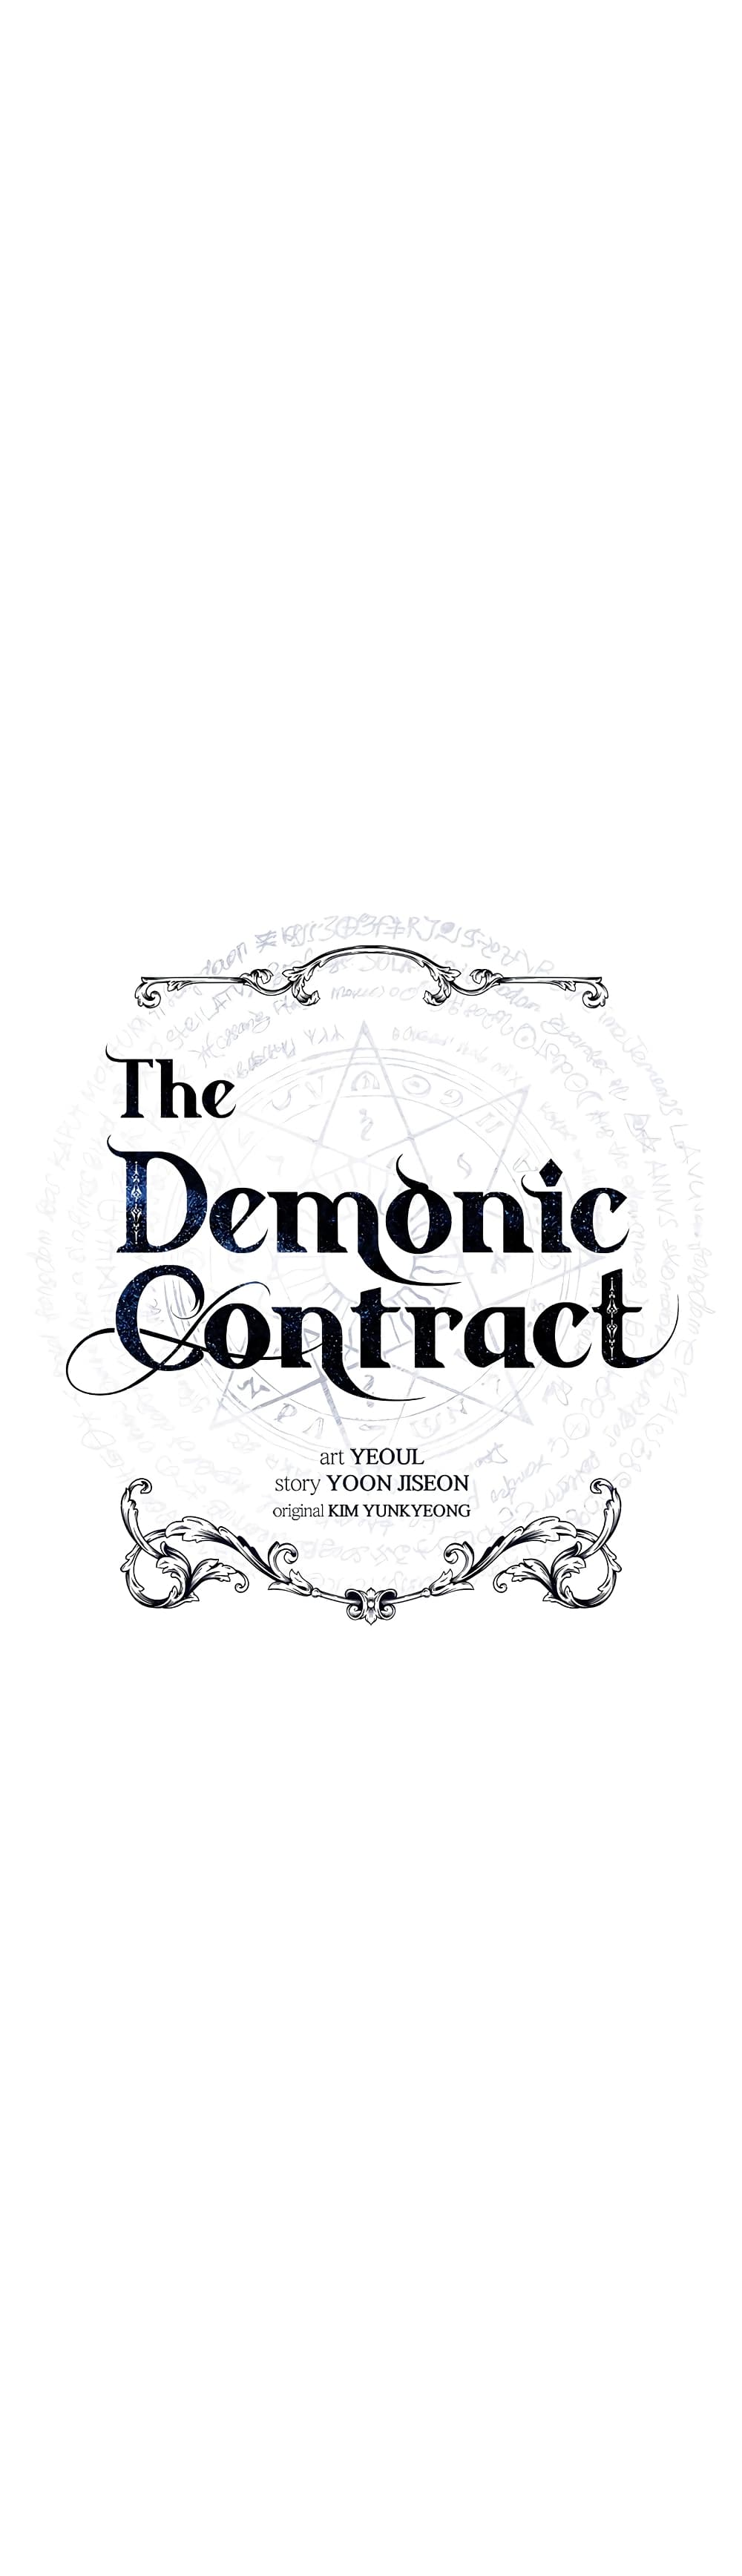 The Demonic Contract 52 (6)